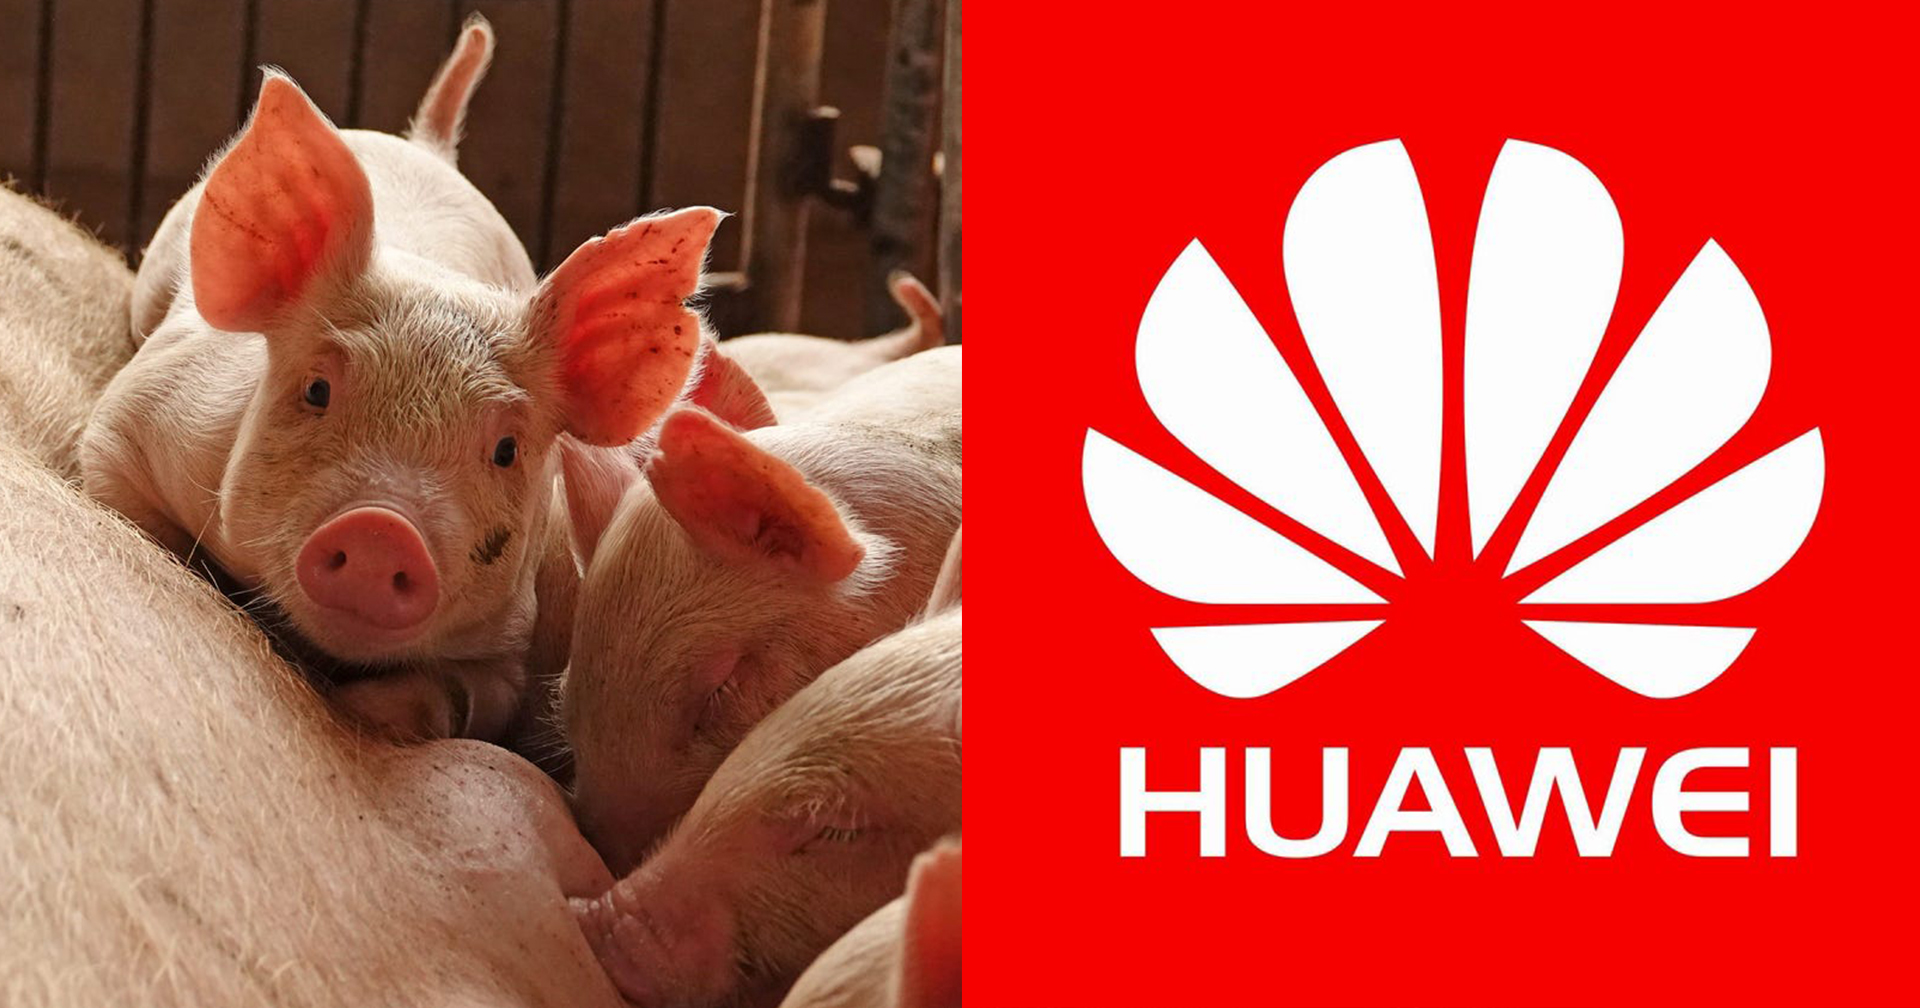 Huawei หันมาทำ AI ให้ฟาร์มหมูและเหมือง! หลังยอดขายสมาร์ตโฟนตกฮวบ